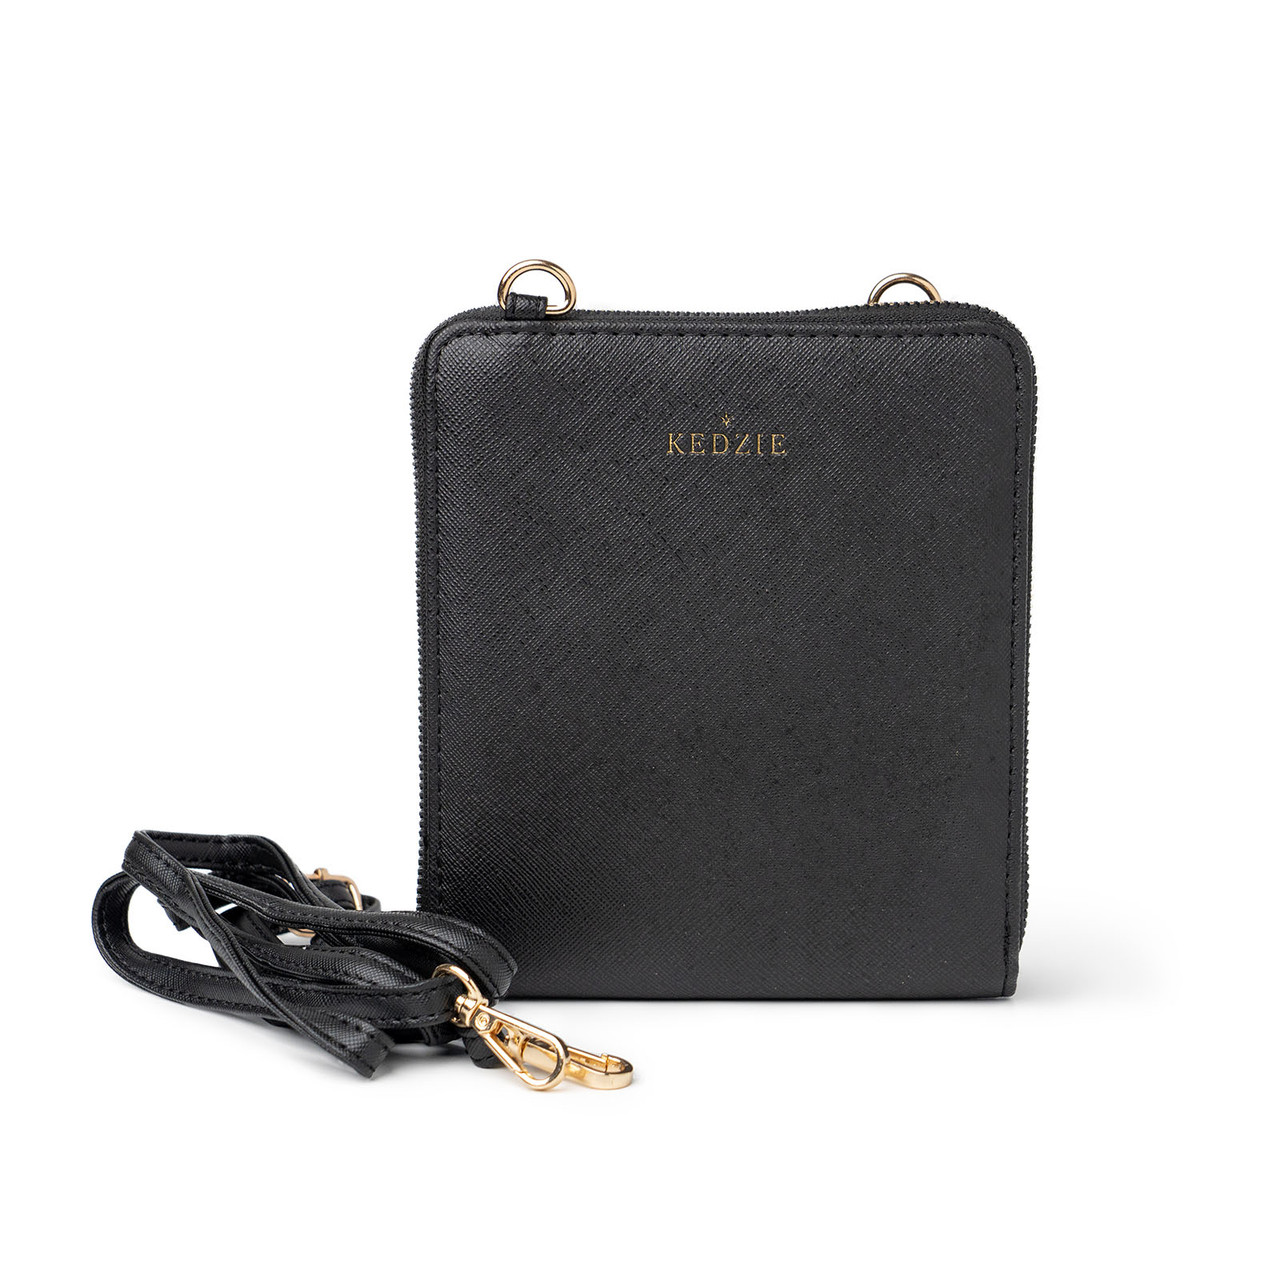 Prada coin purse keychain - Black  Coin purse keychain, Purses, Designer  coin purse